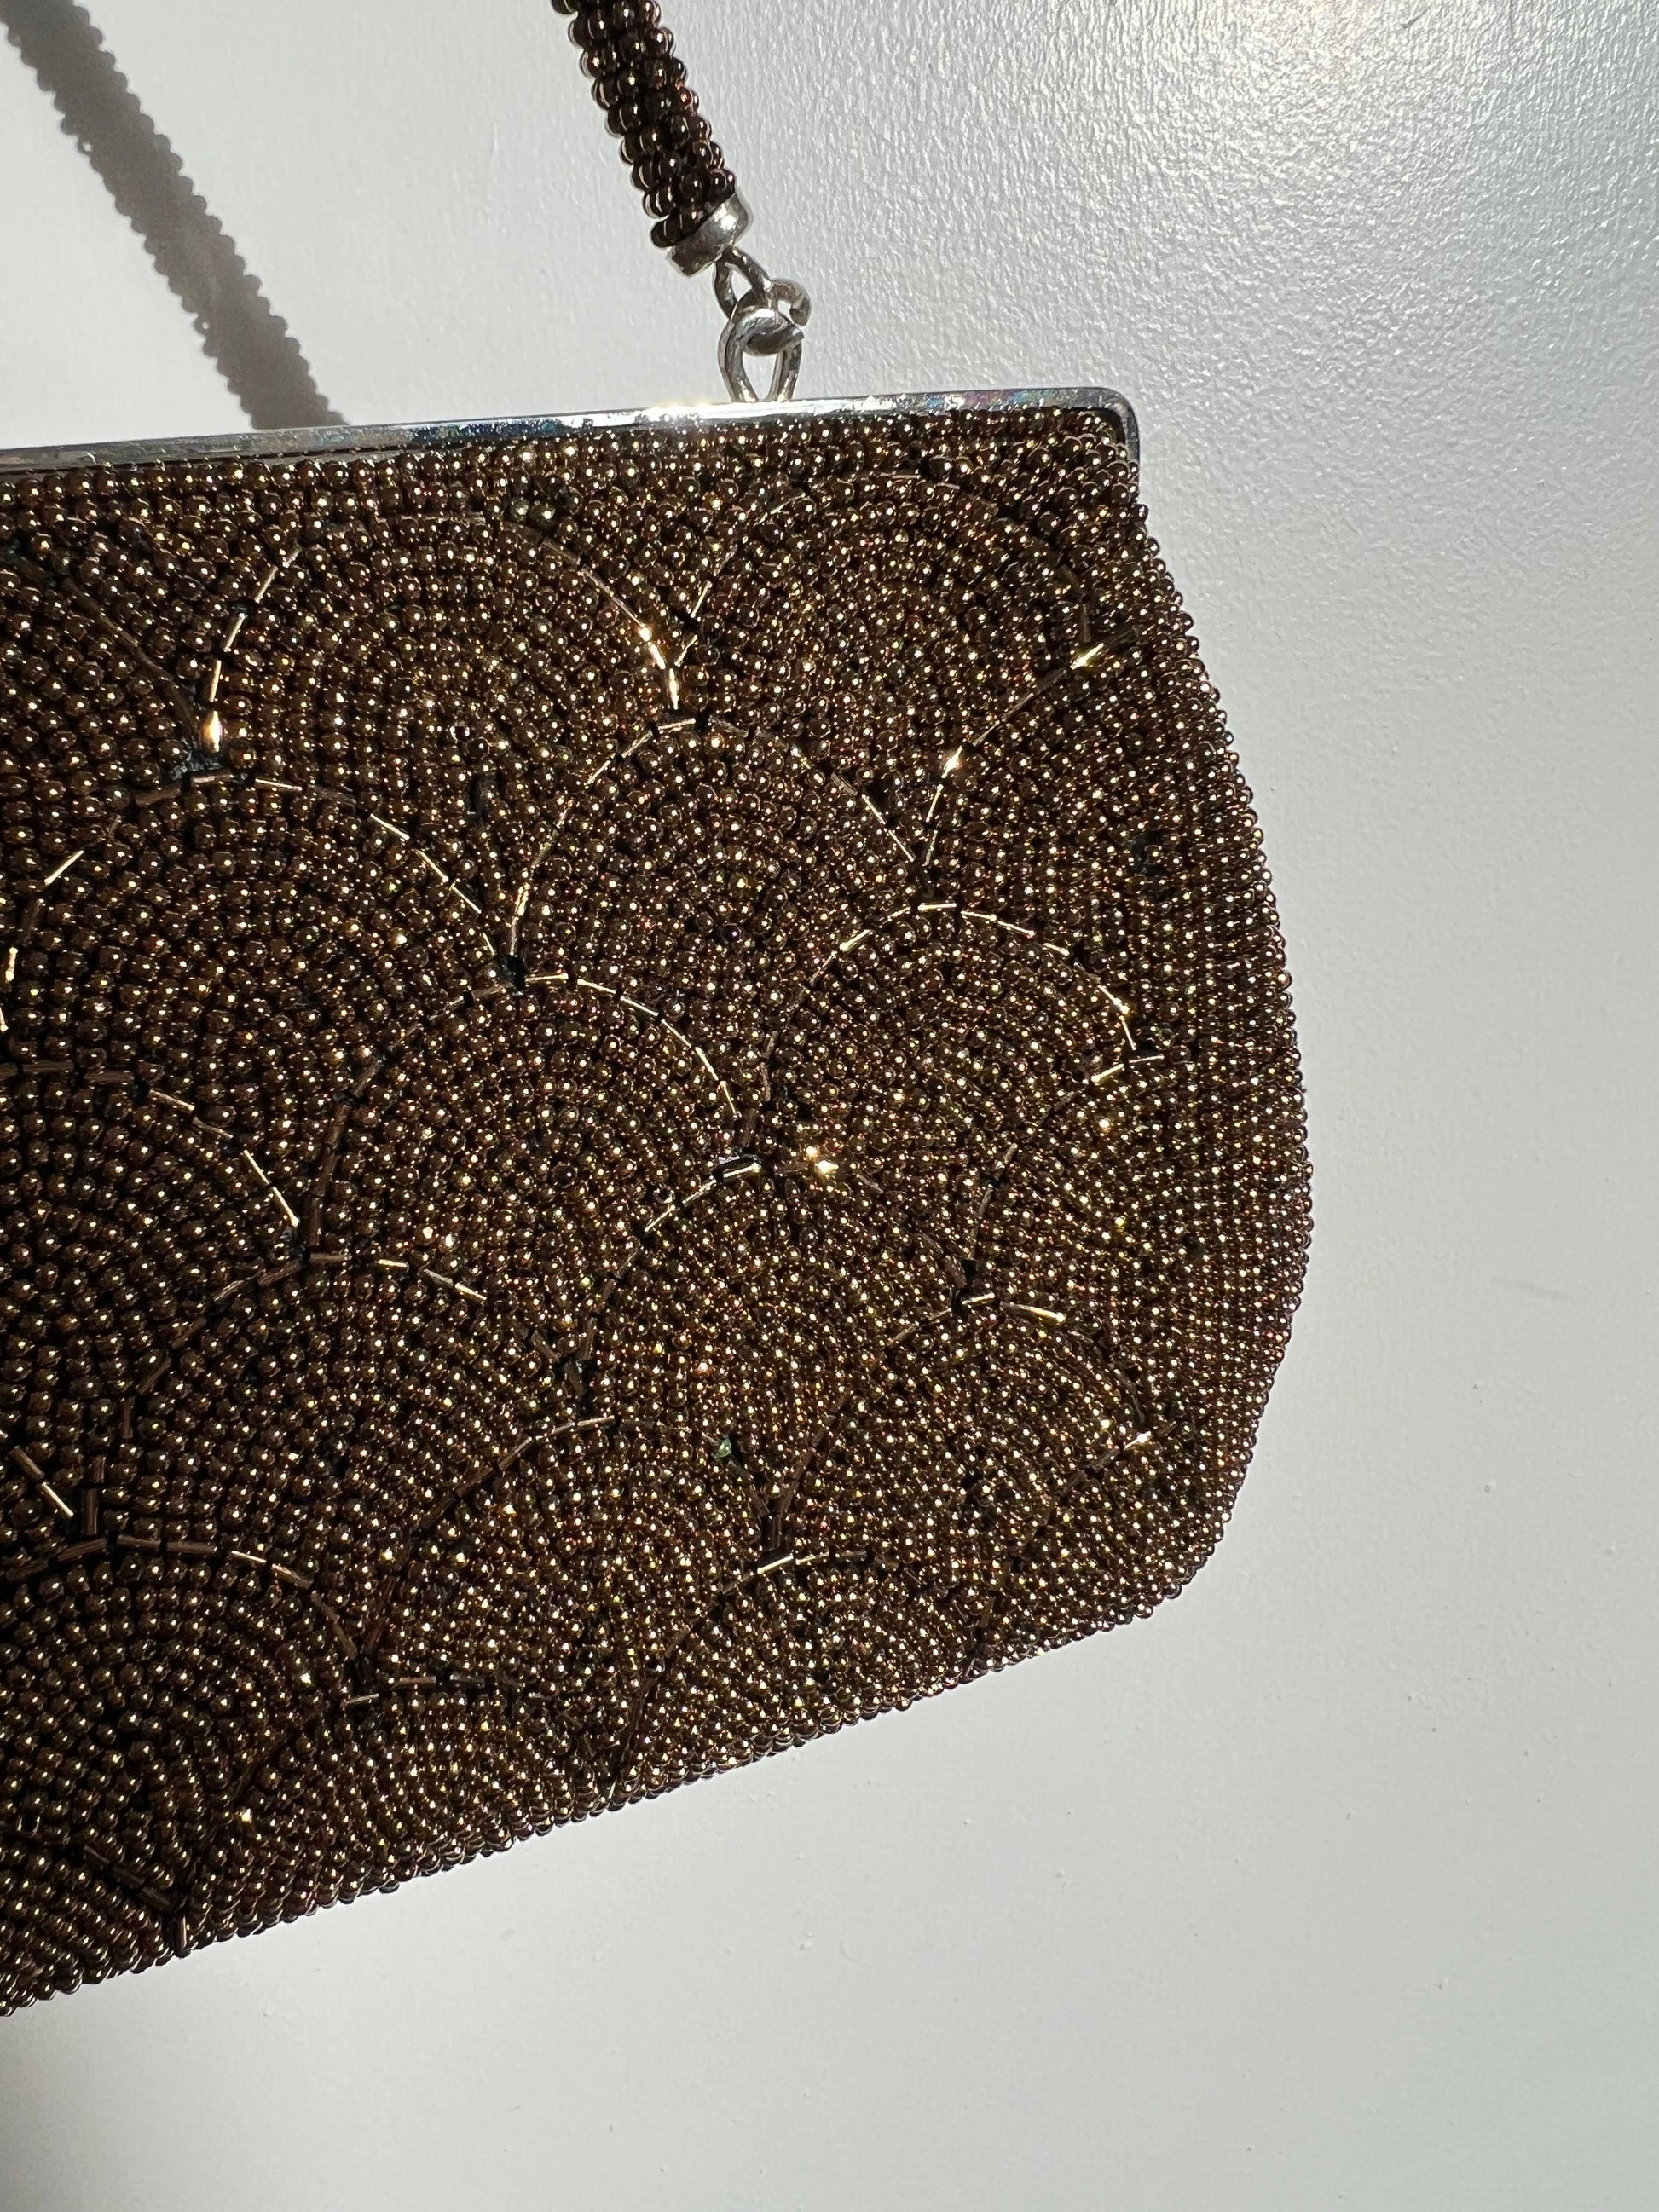 Vintage bronze beaded bag close up